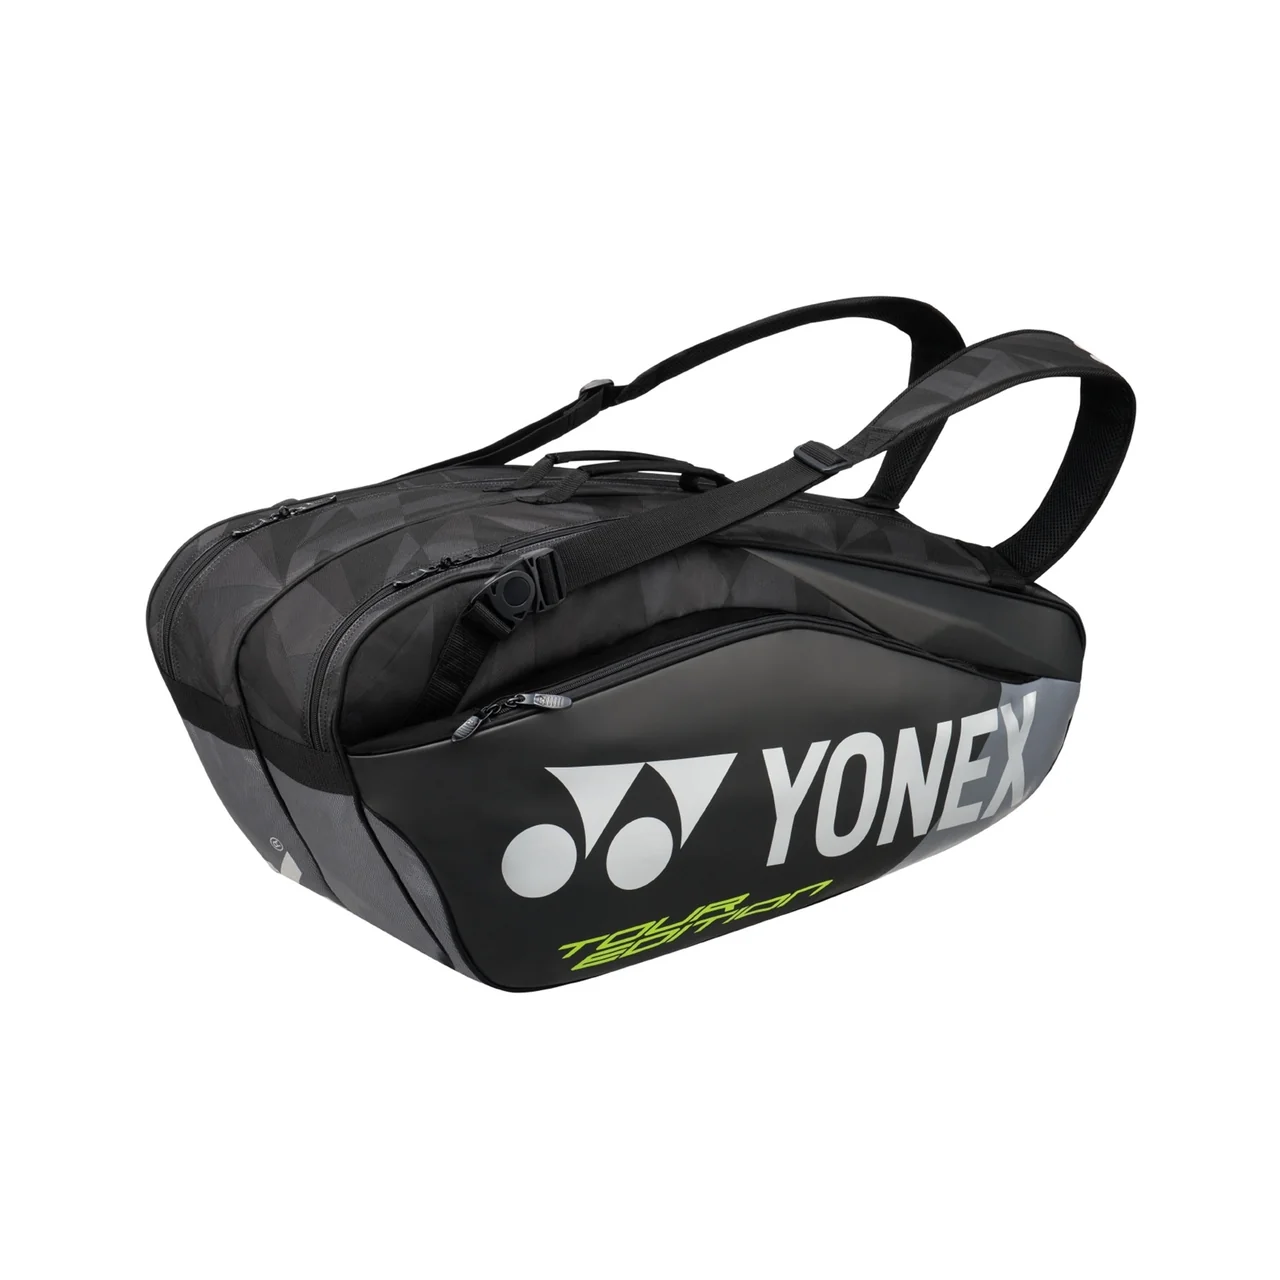 Yonex Pro Bag x6 Black Edition 2019